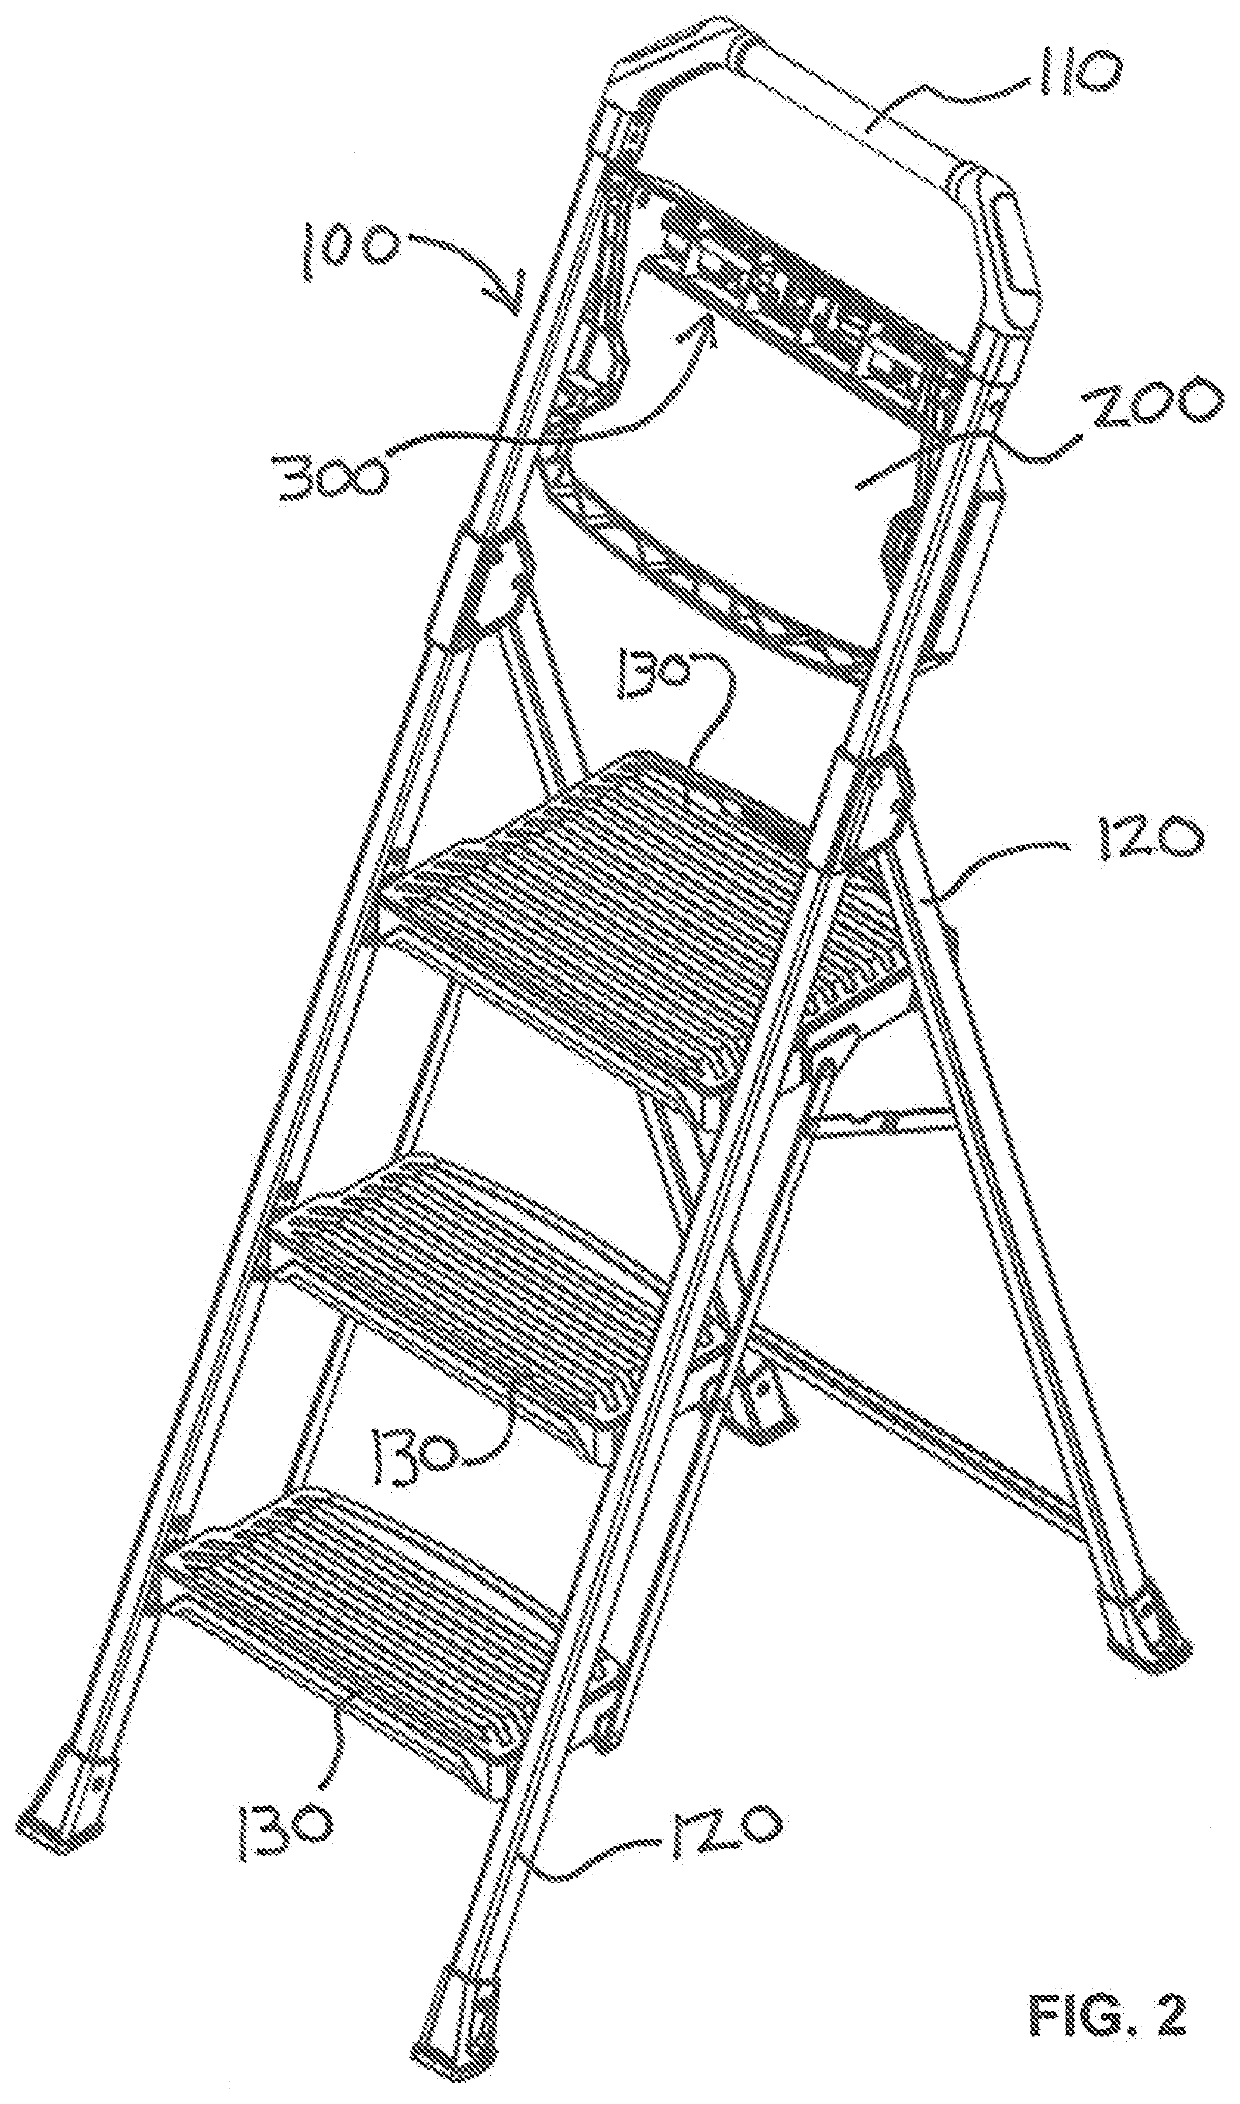 Ladder tray locking mechanism